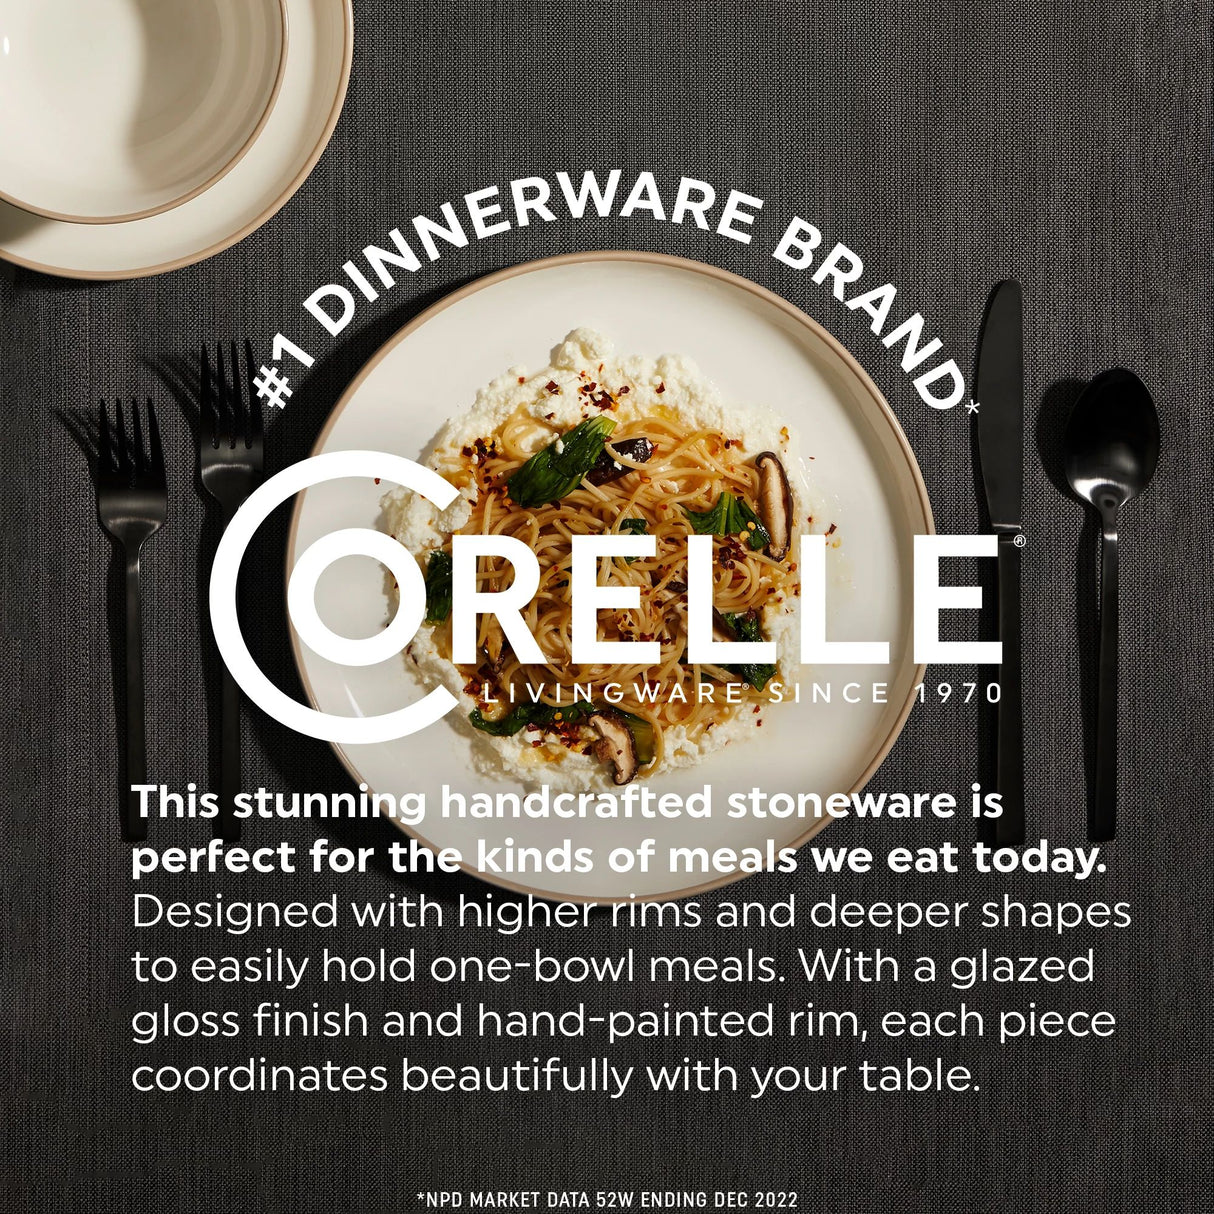  Stoneware Sea Salt dinnerplate with text #1 dinnerware brand